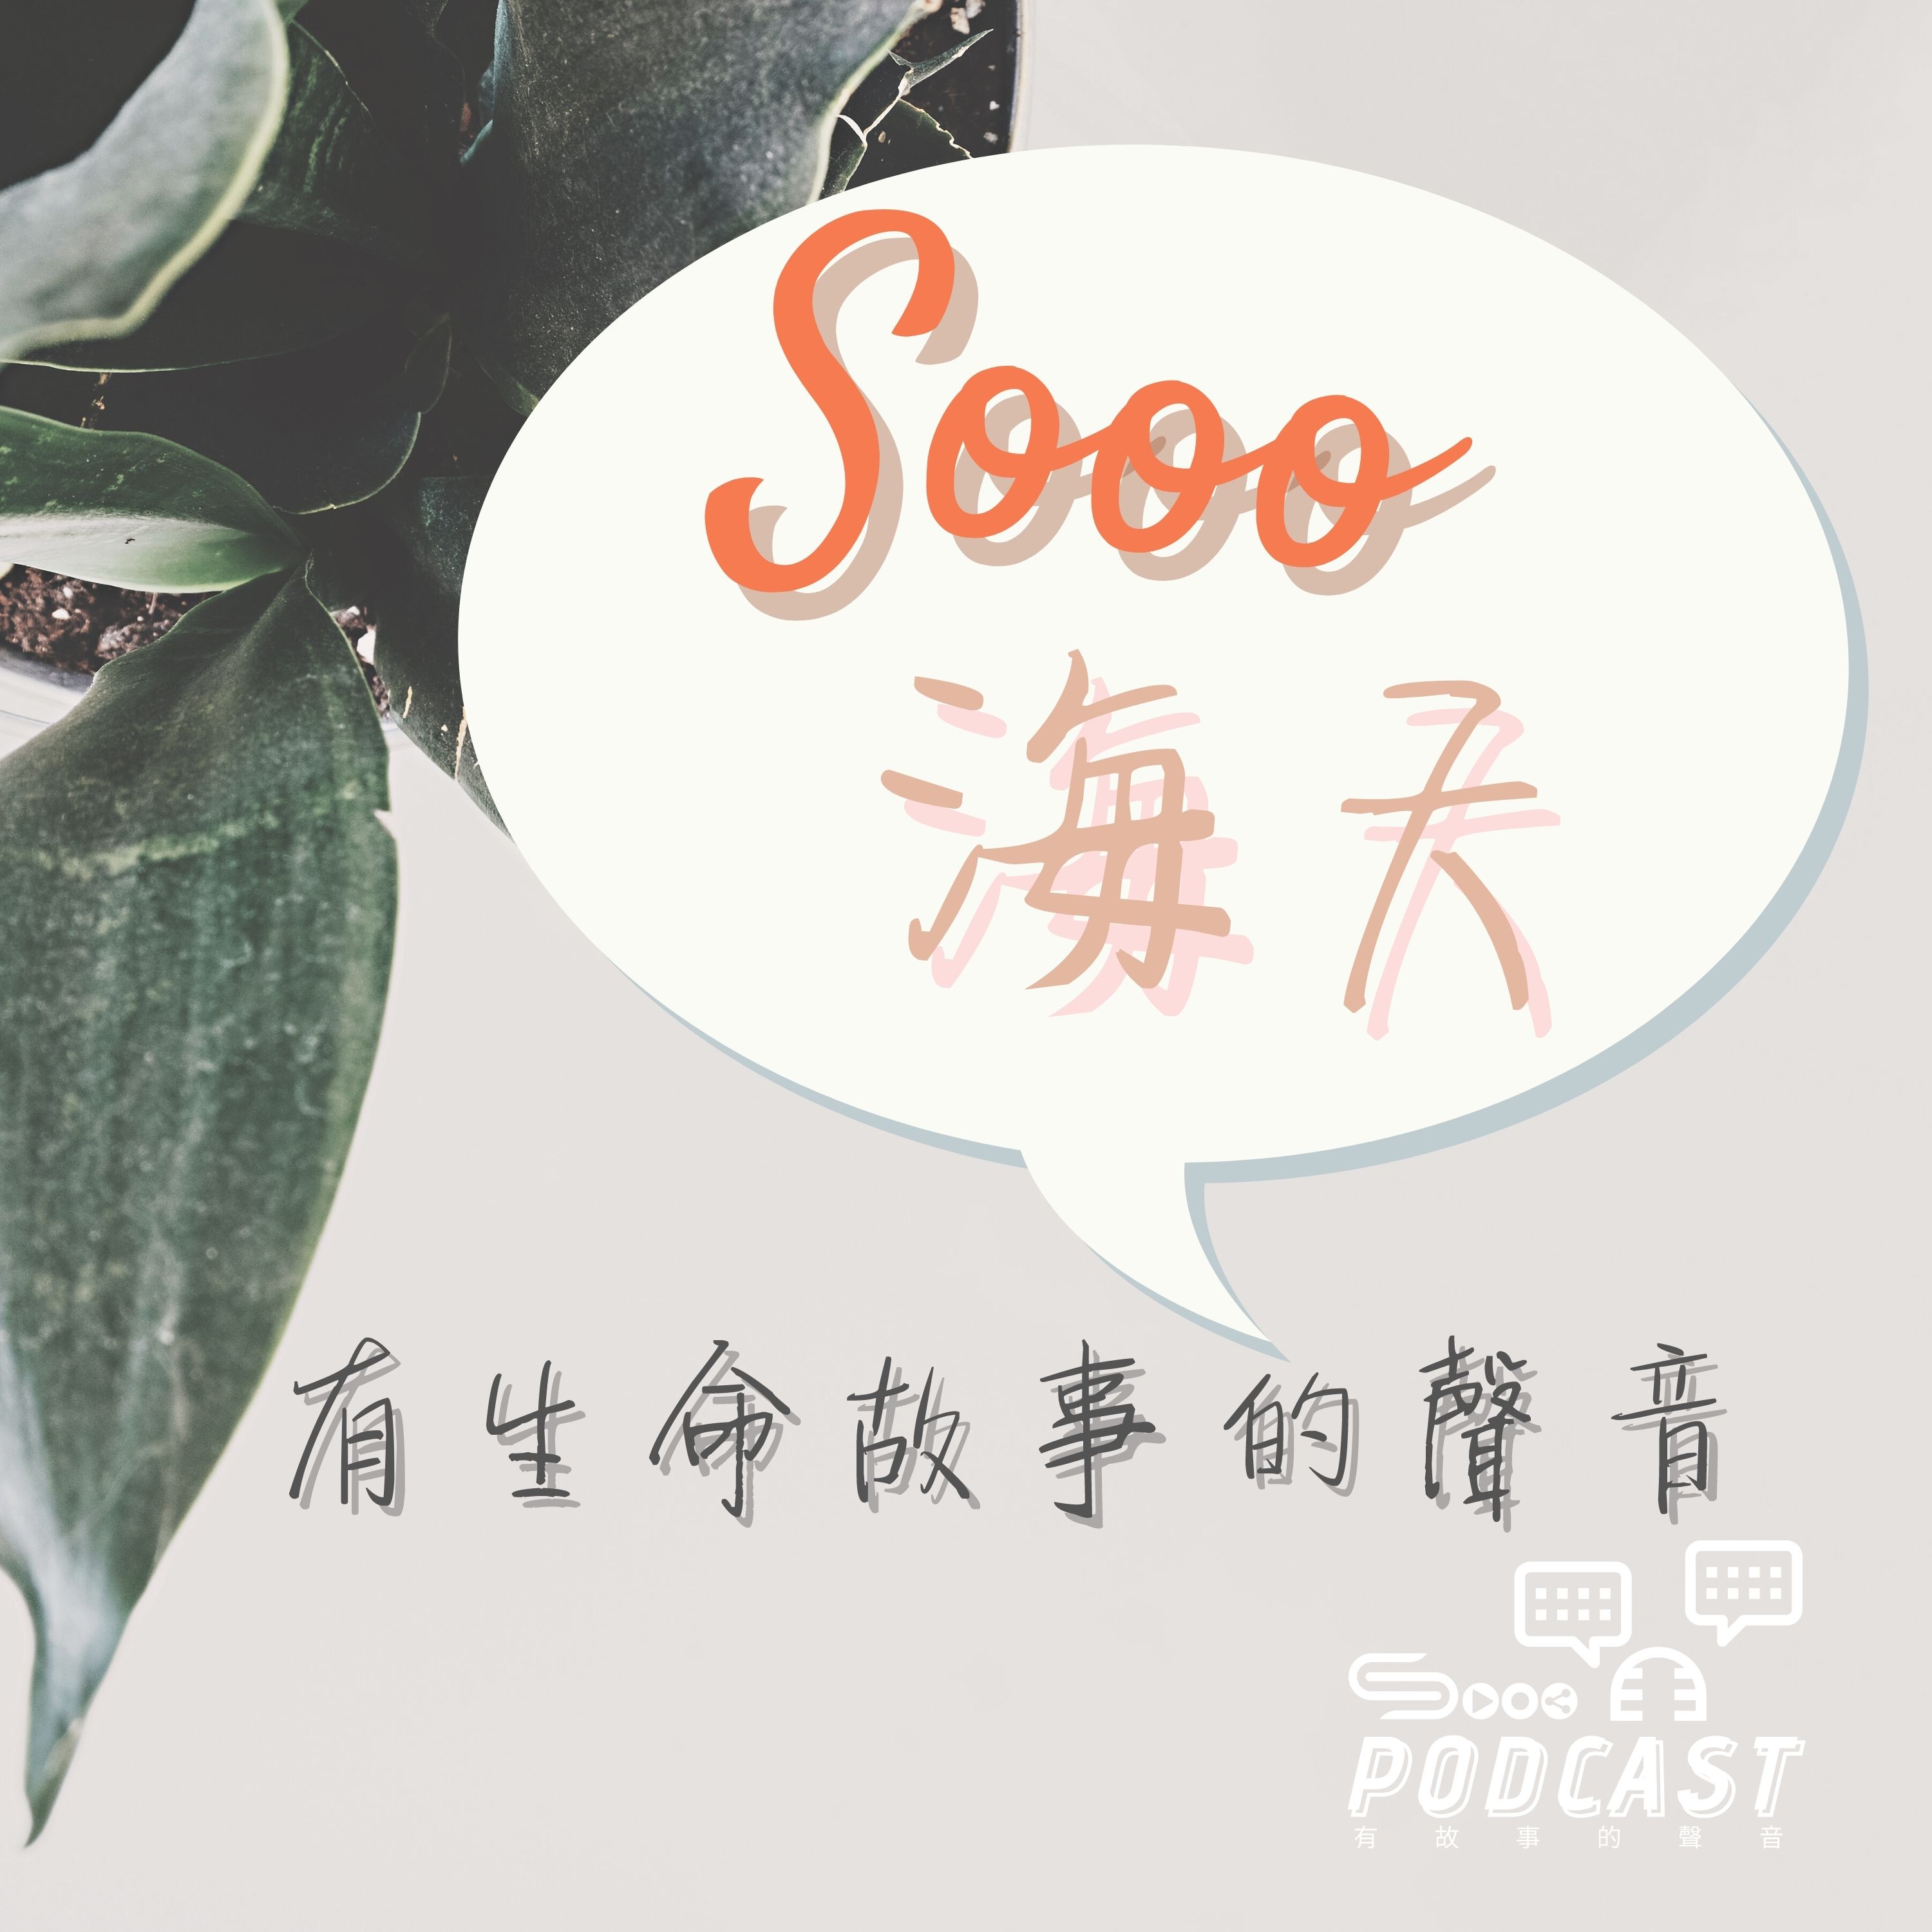 Artwork for podcast Sooo 海天 生命故事的聲音